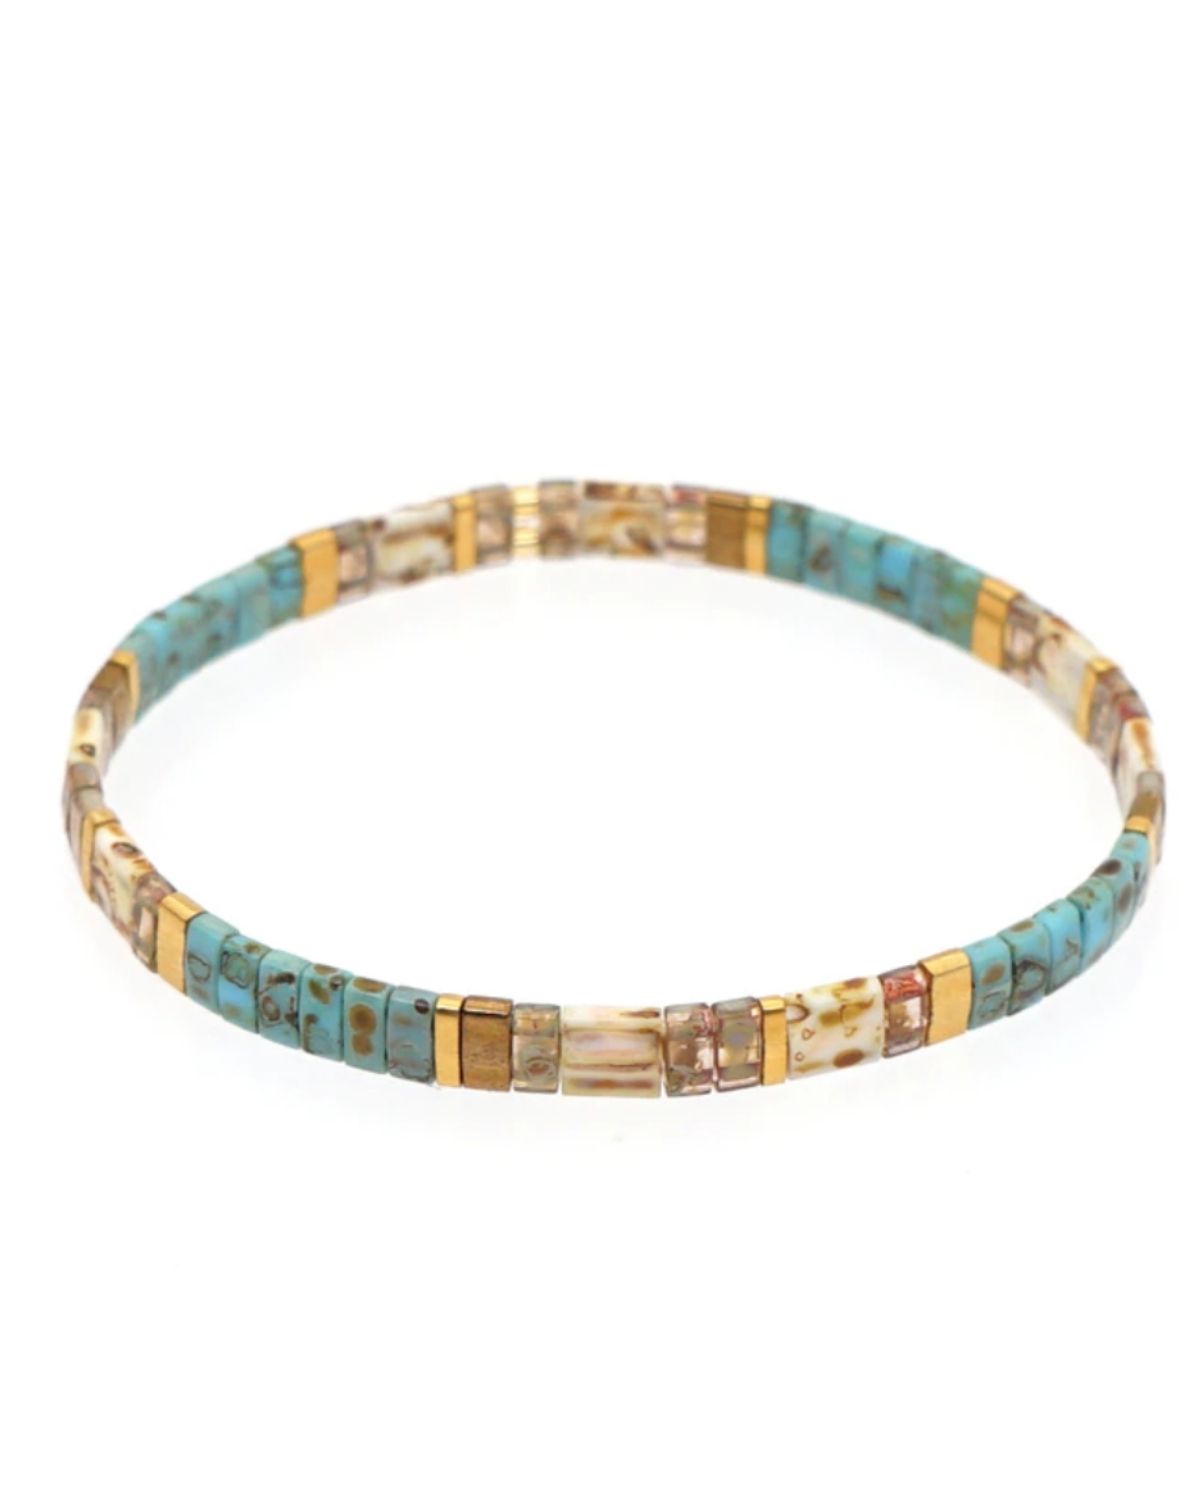 Bracelet with Marbled Turquoise and Gold Miyuki Tila Beads